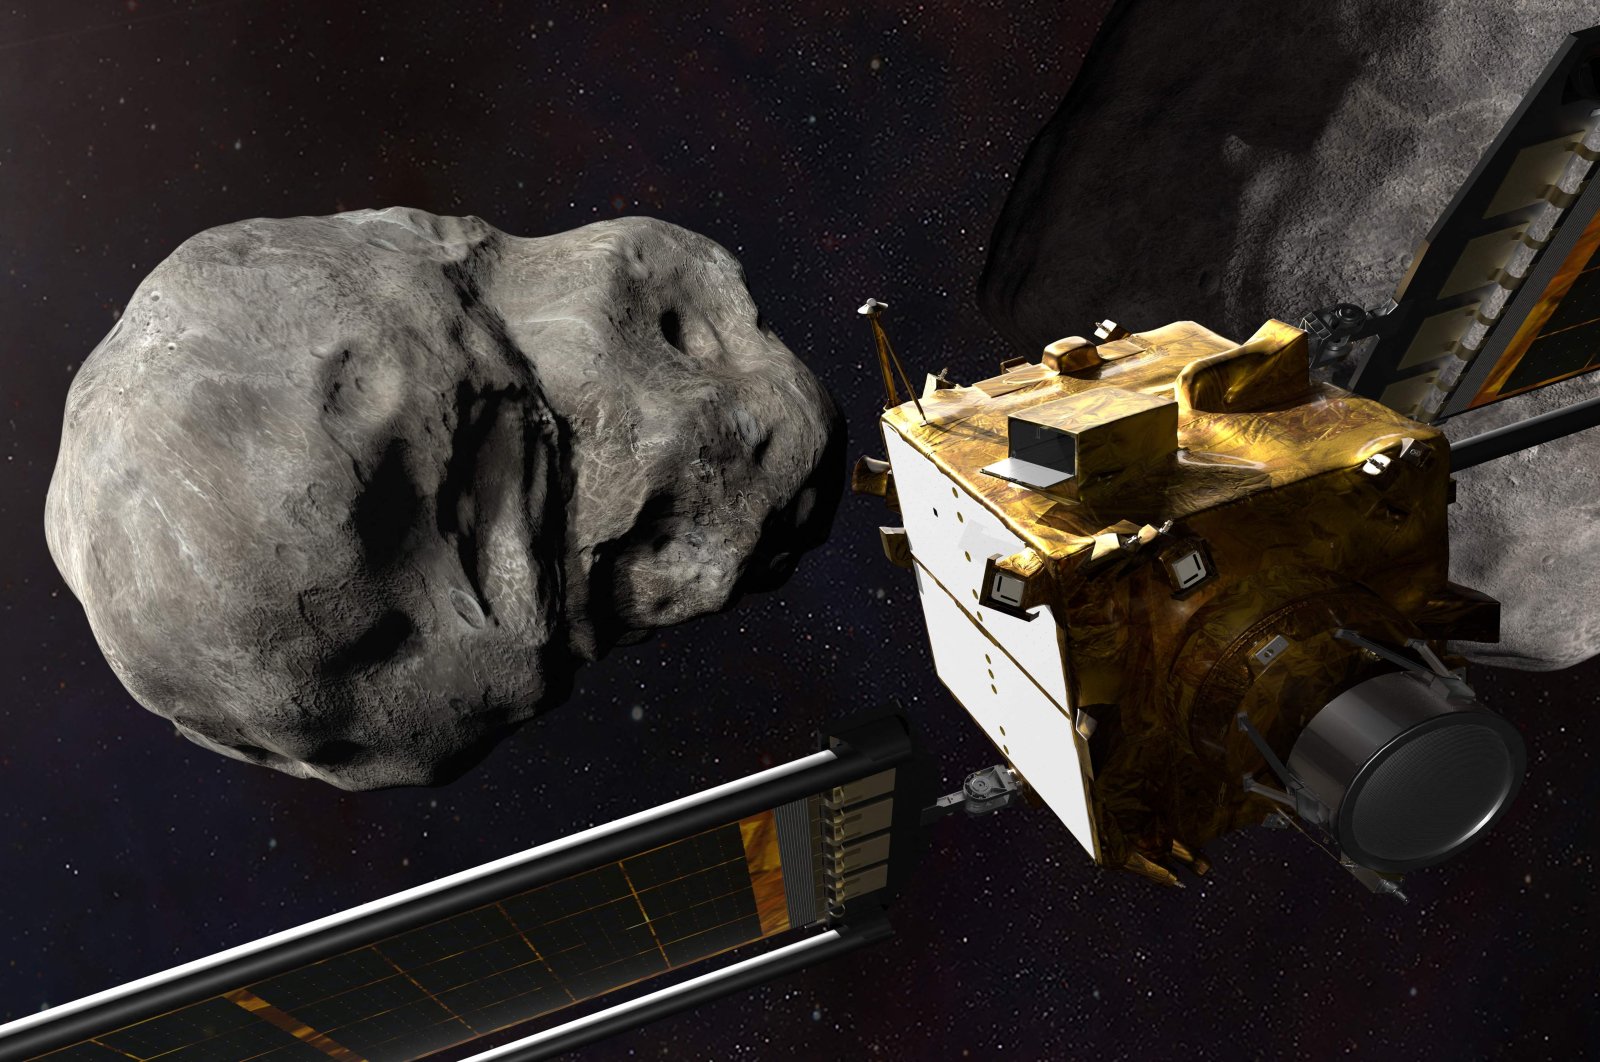 NASA akan menabrakkan pesawat ruang angkasa ke asteroid dalam uji pertahanan planet